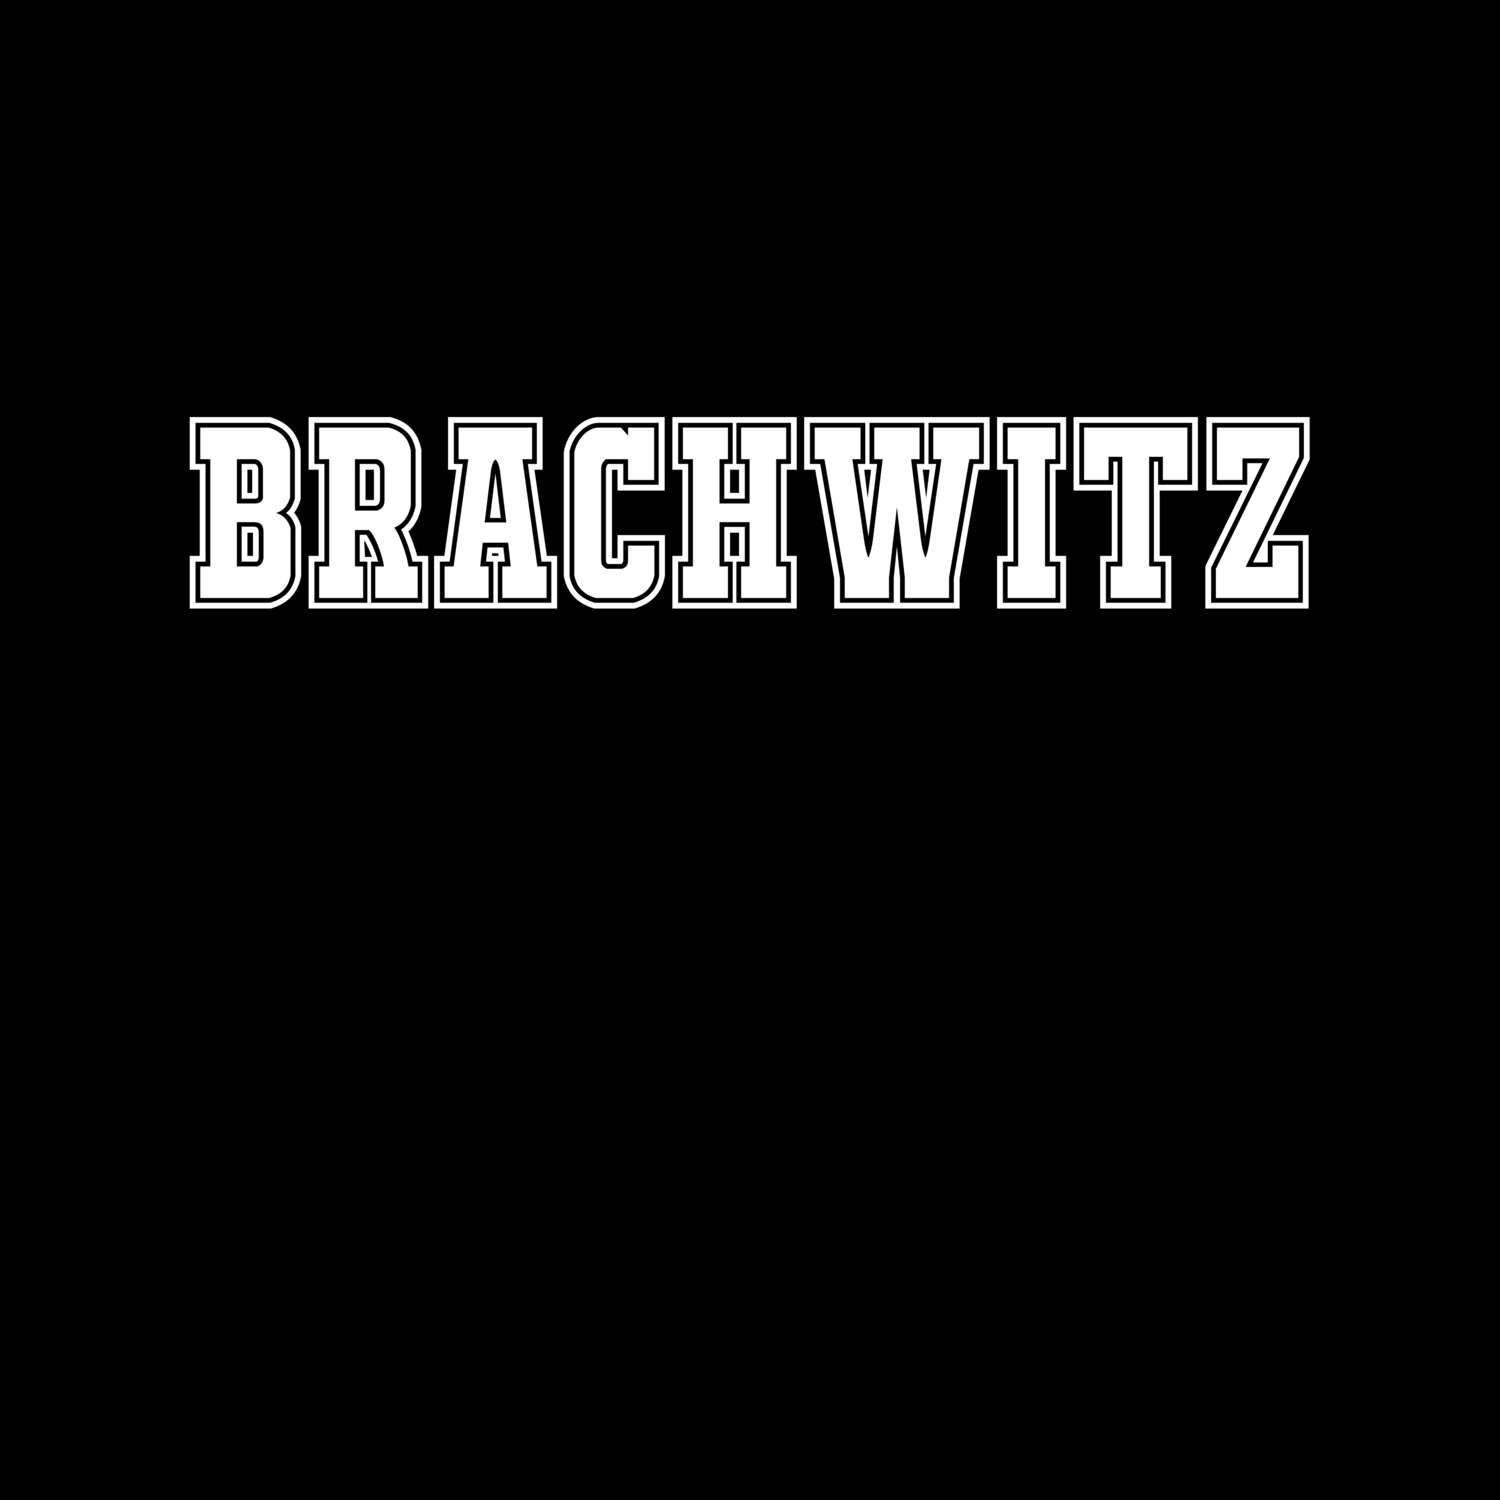 Brachwitz T-Shirt »Classic«